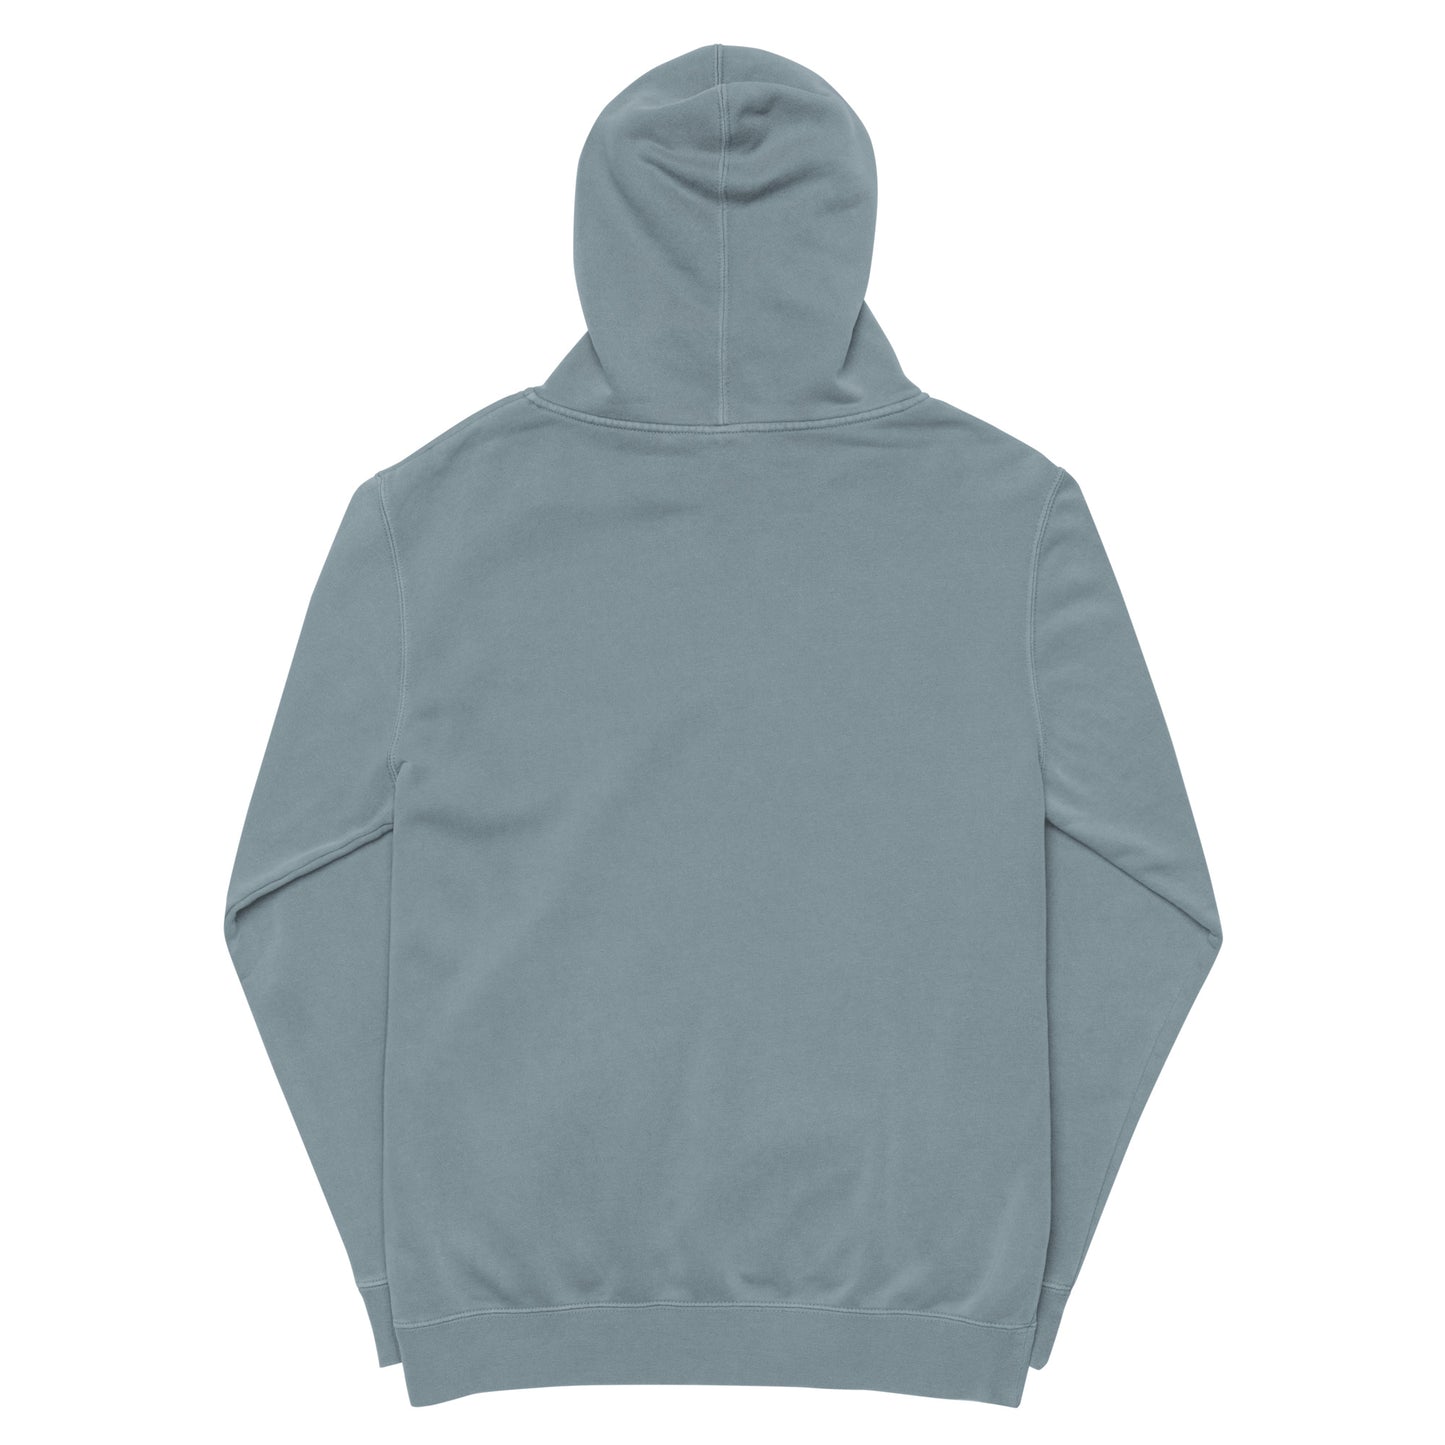 Late90s Mountain Gazette Embroidered Hooded Sweatshirt